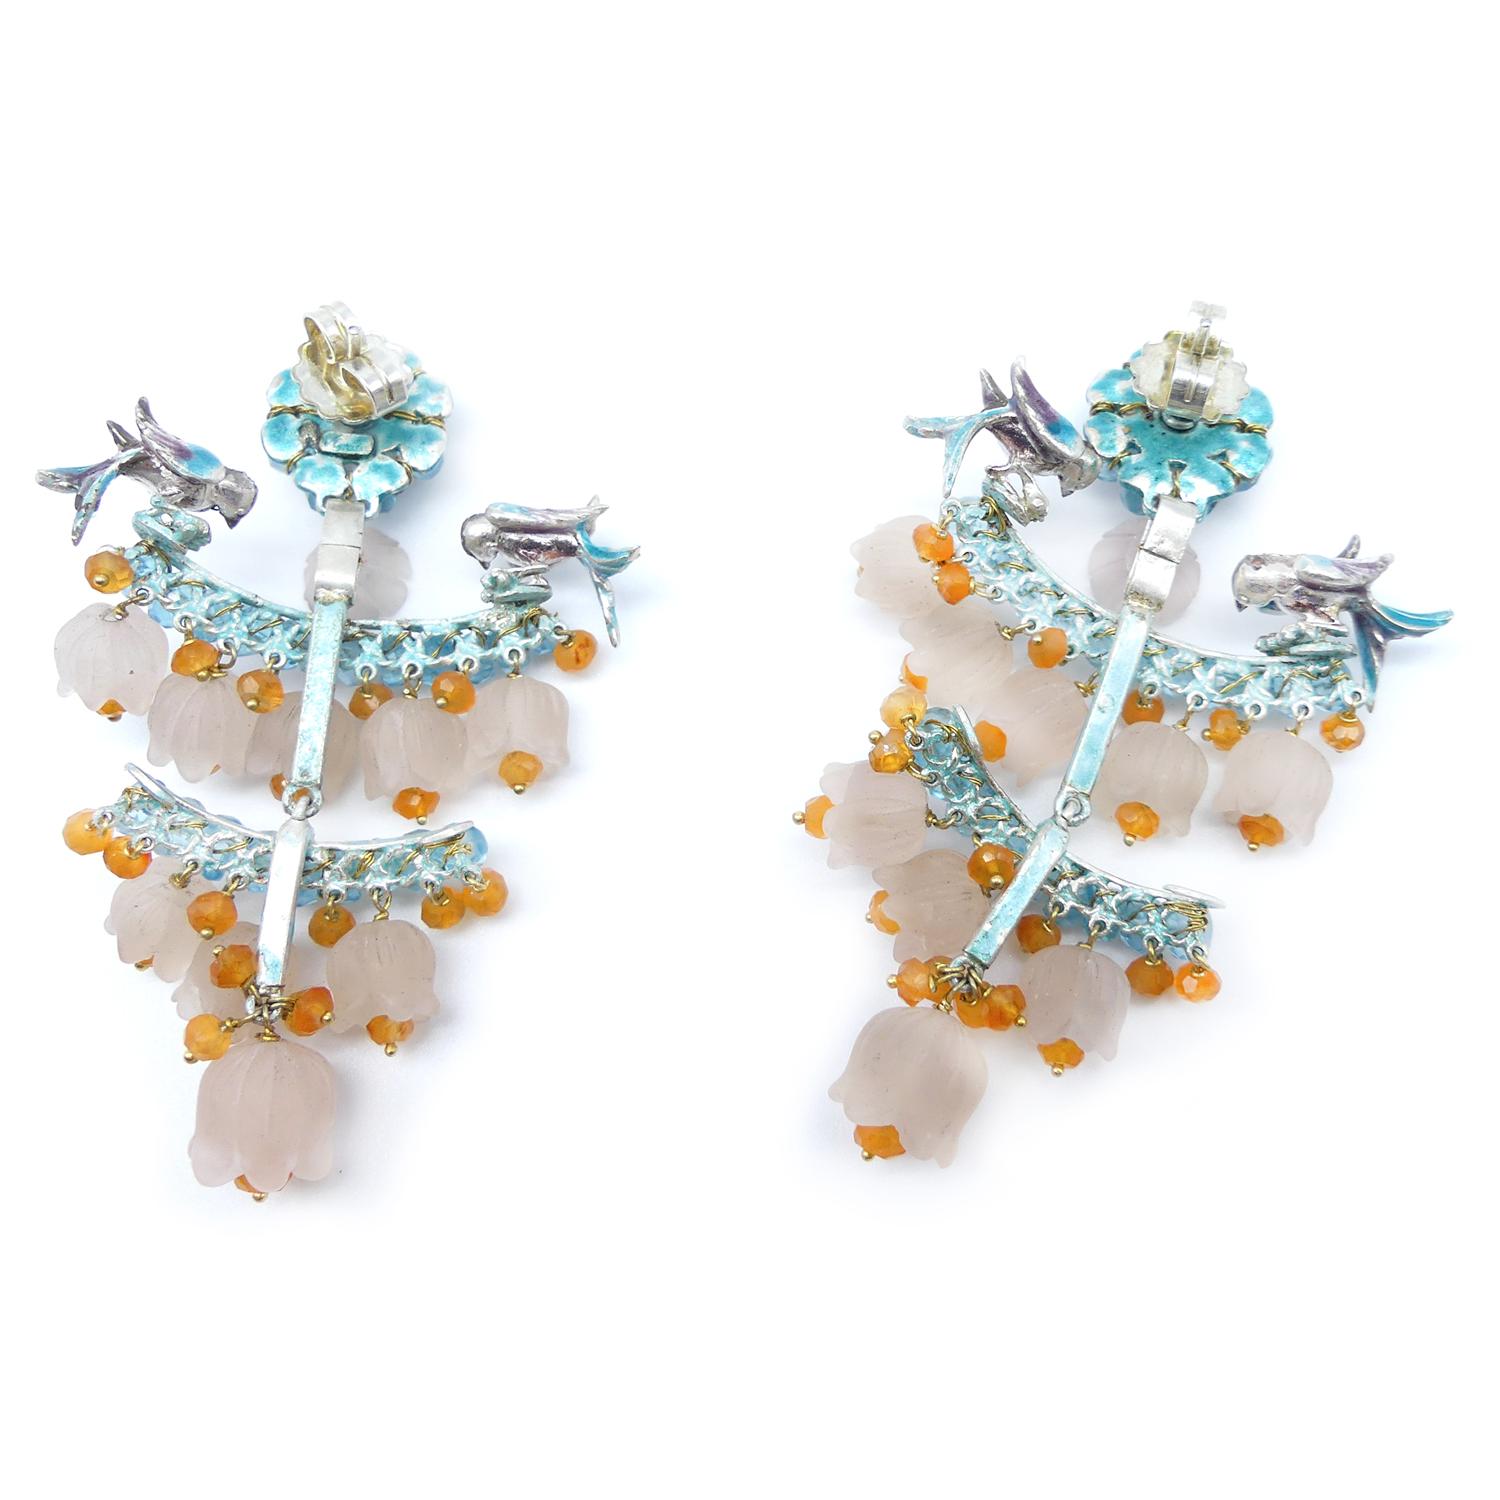 Mixed Cut 21st Century Sapphires Apatite Birds Oranges Flowers Silver Enameled Earrings